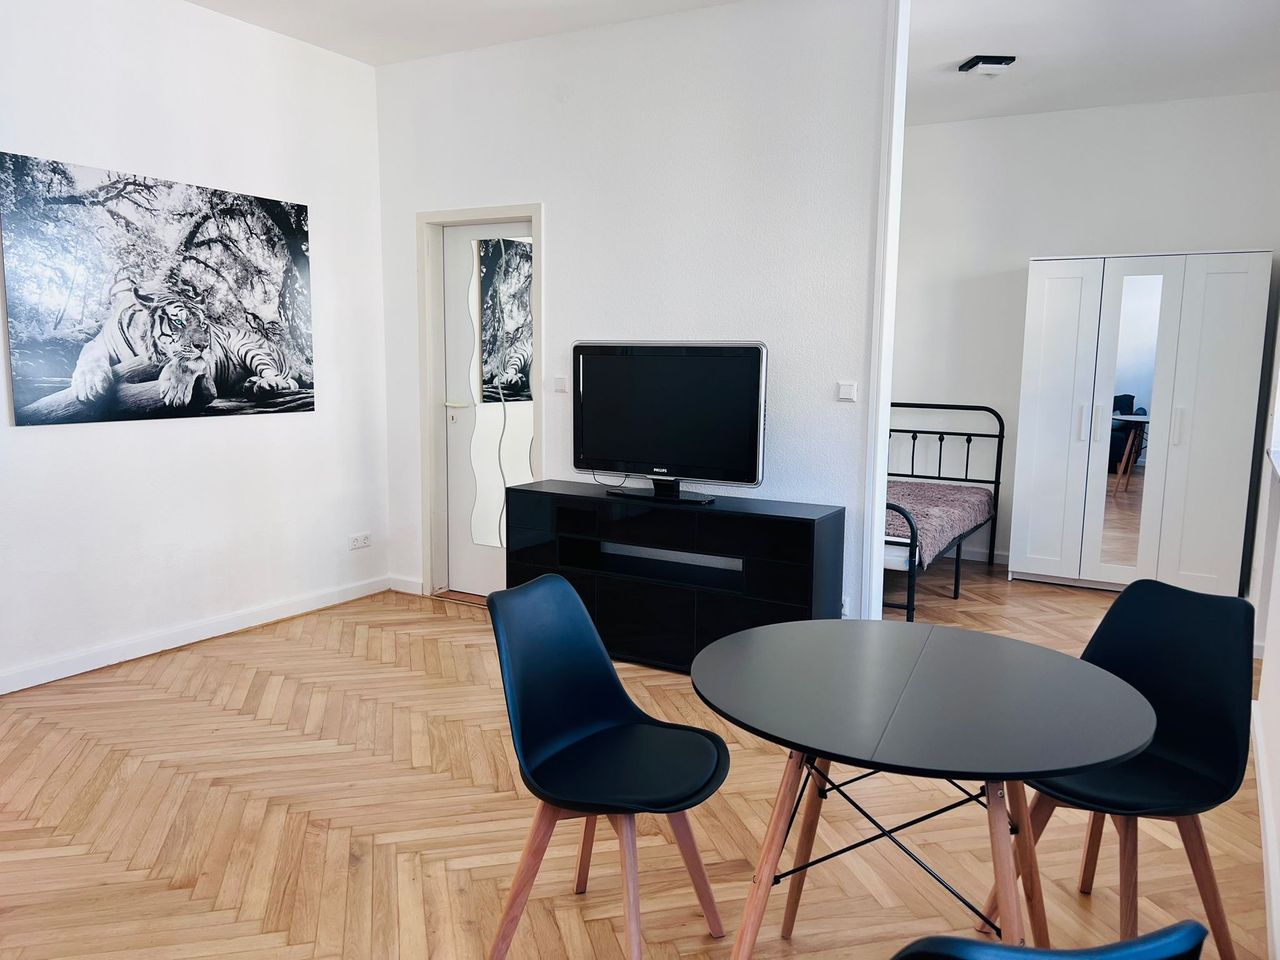 1.5 room flat in Ulm city centre